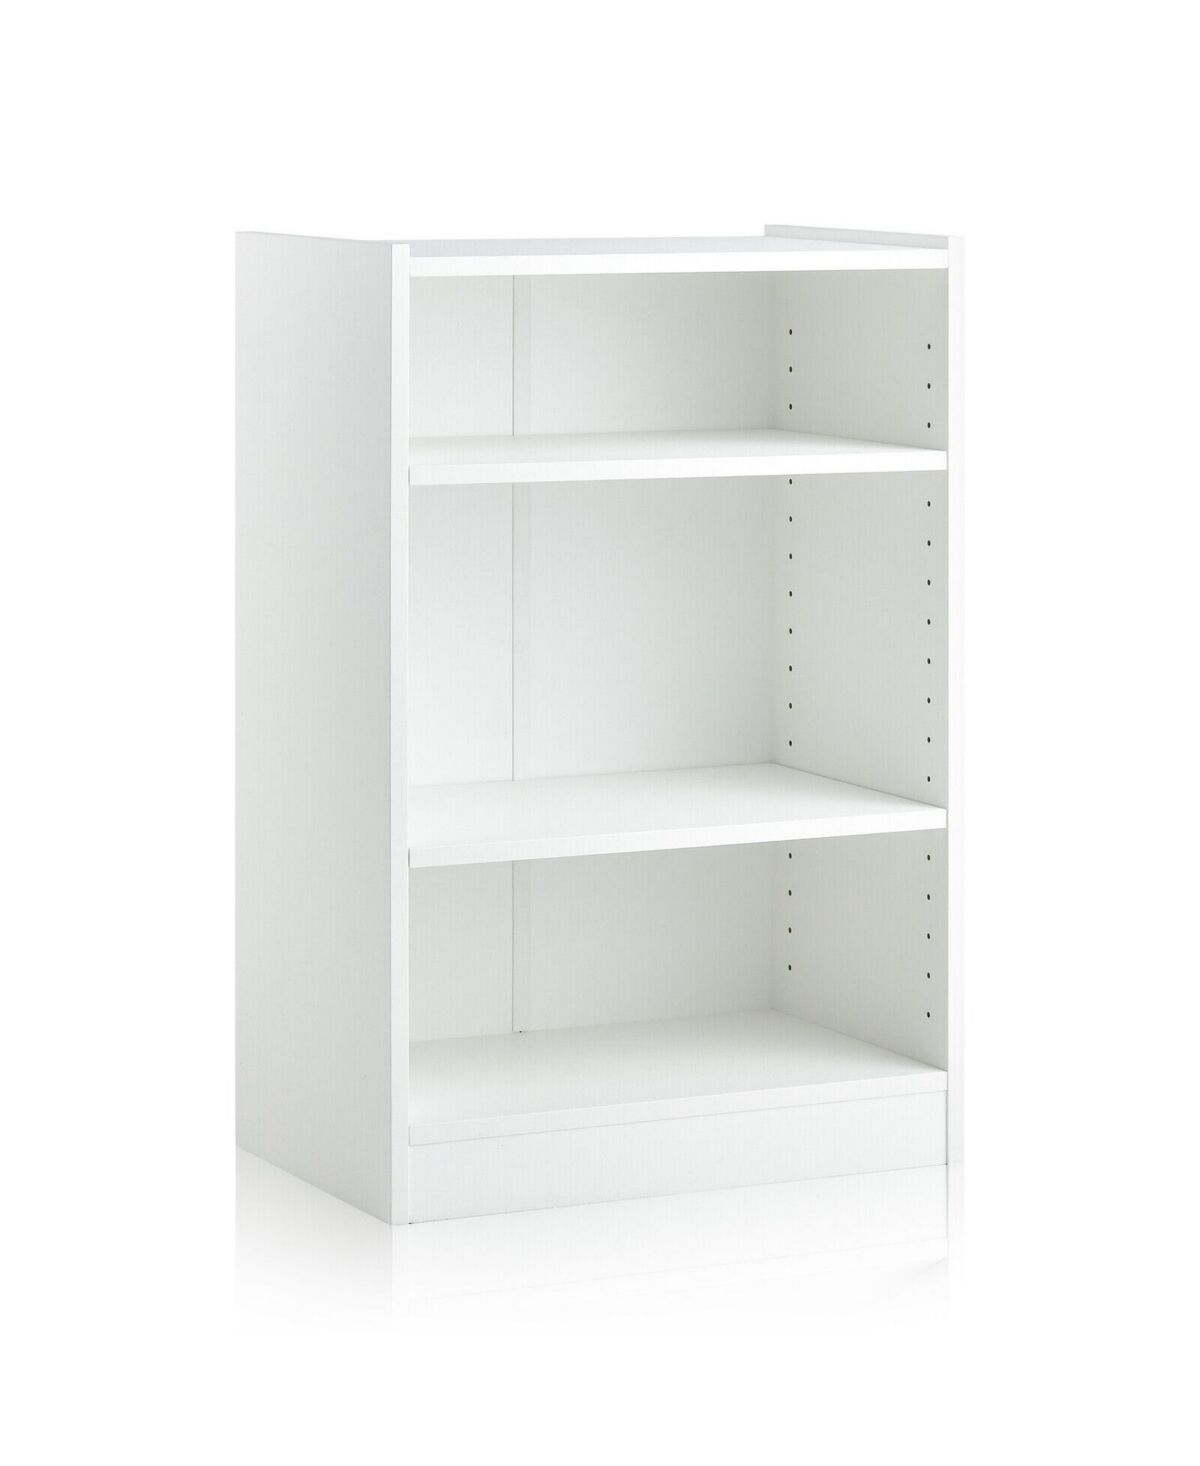 Slickblue 3-Tier Bookcase Open Display Rack Cabinet with Adjustable Shelves - White